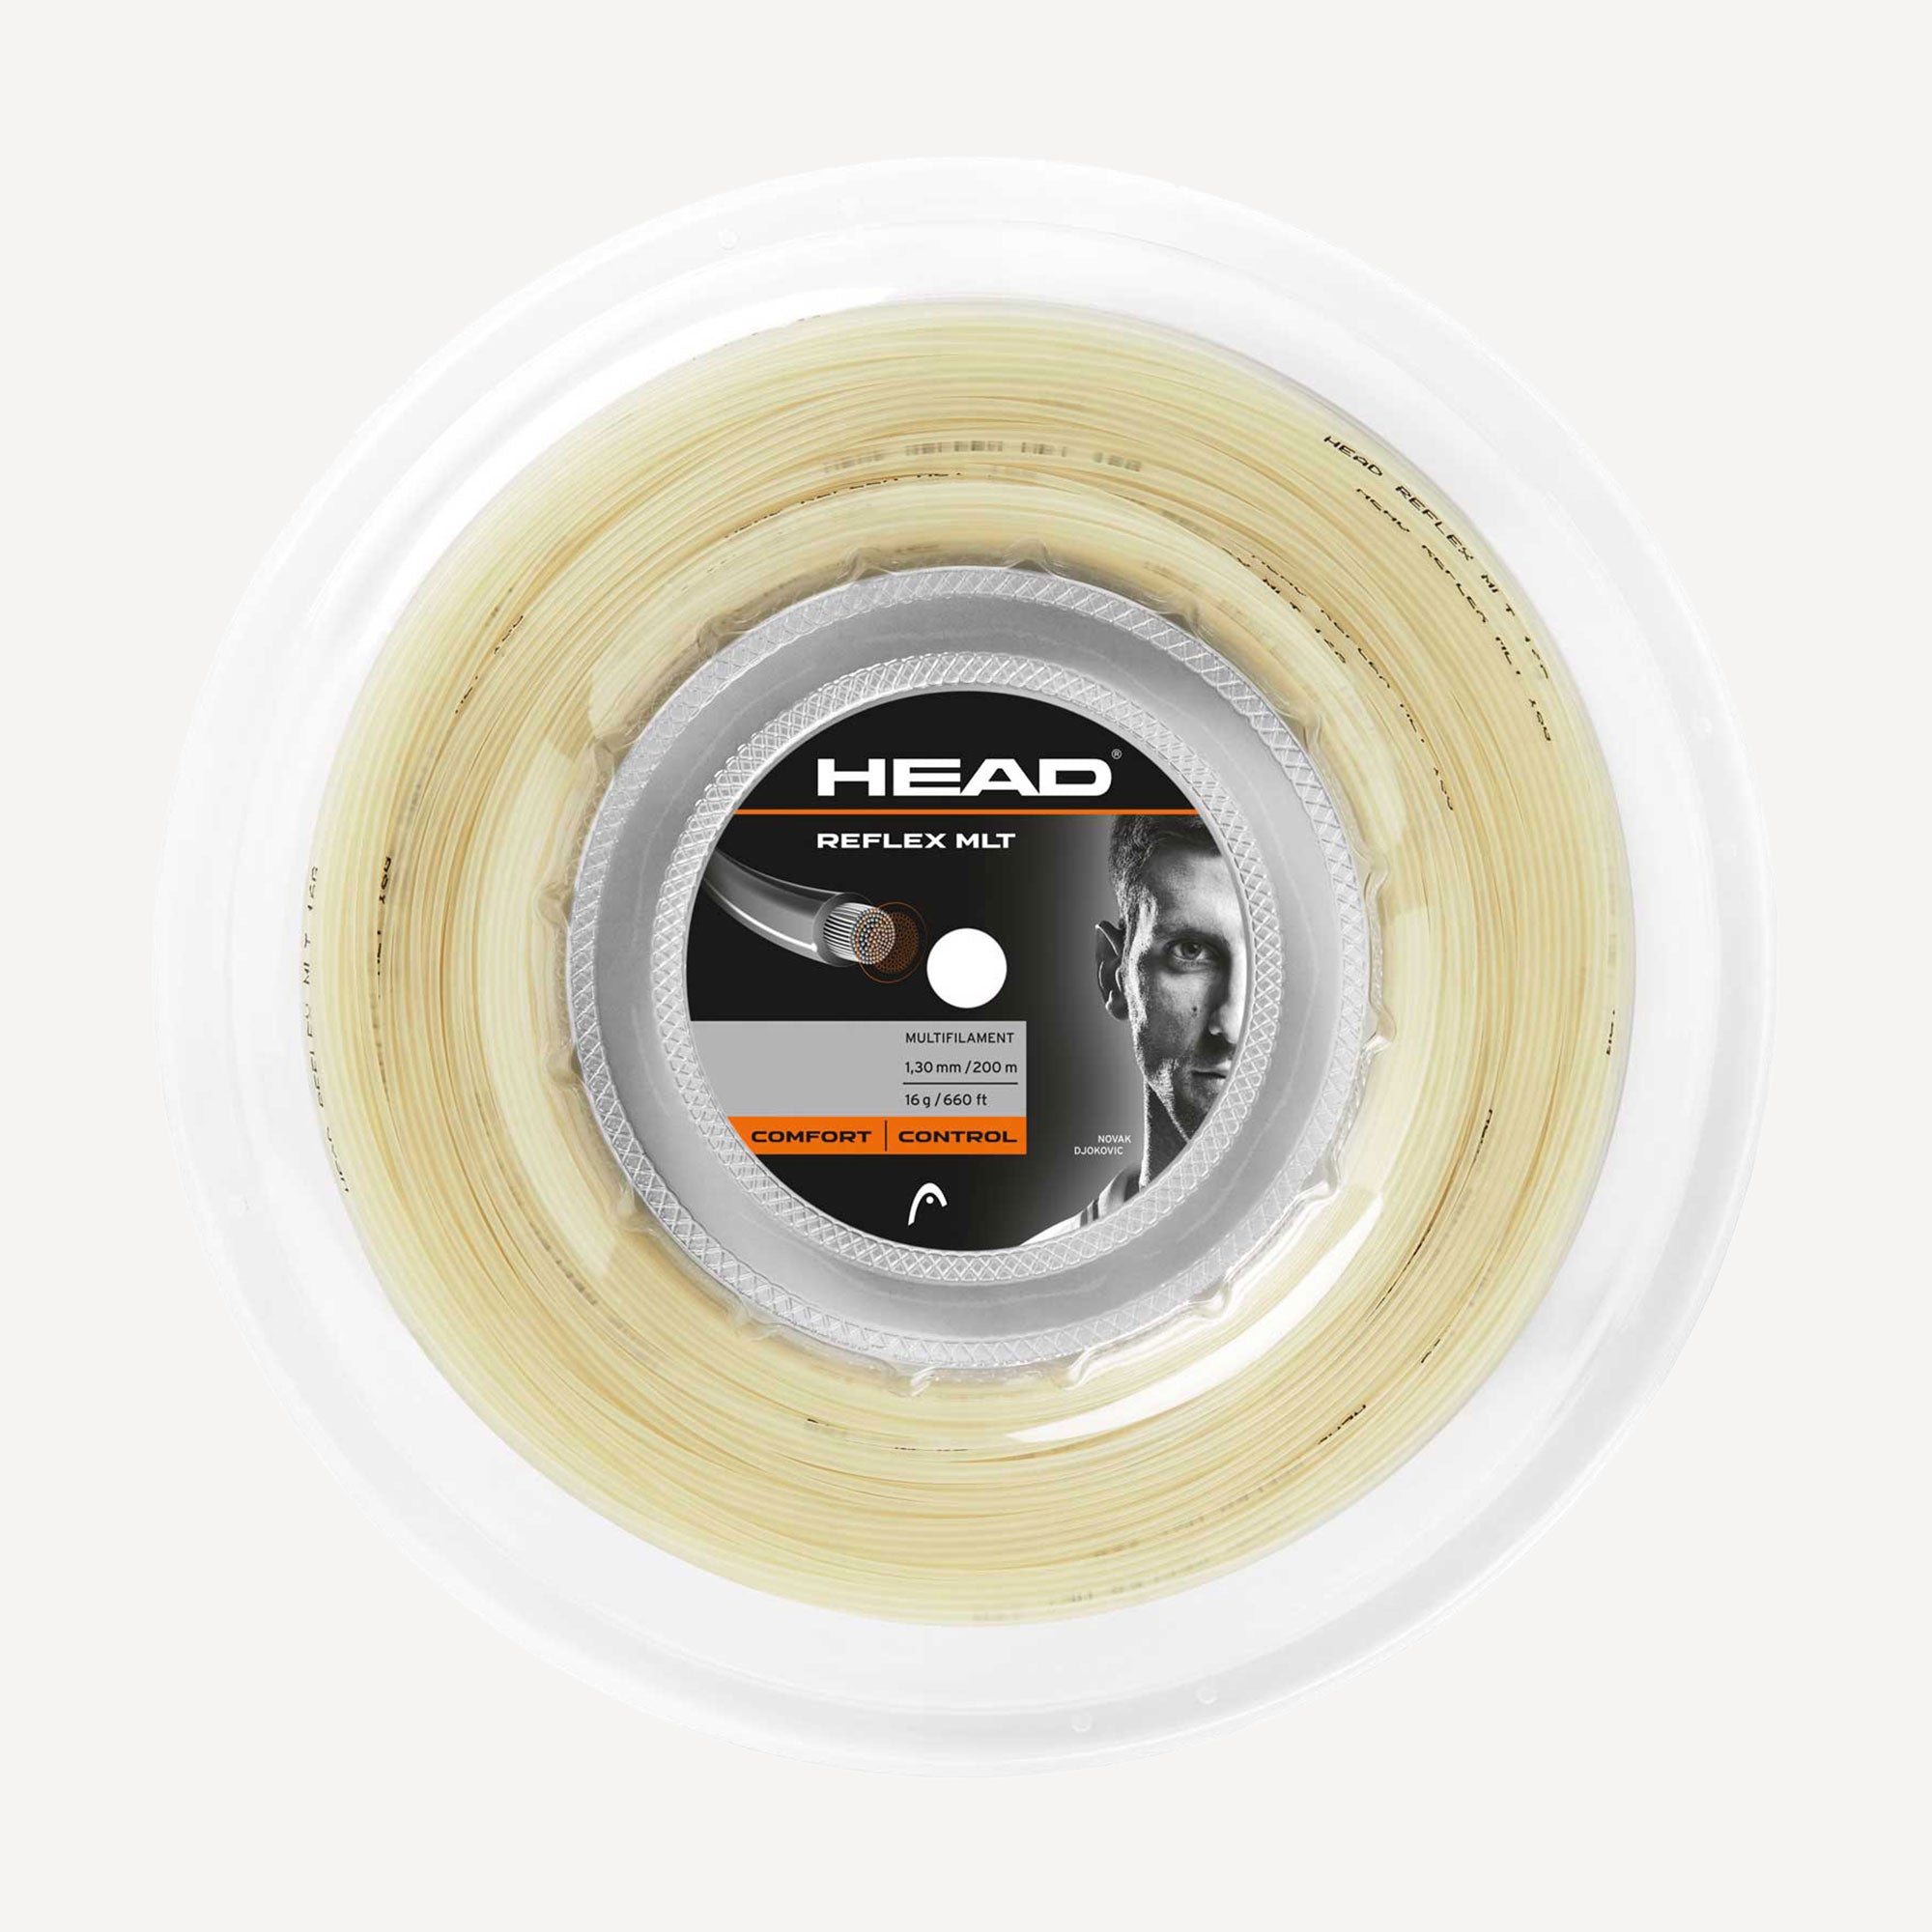 HEAD Reflex MLT Tennis String Reel 200 m - Natural (1)